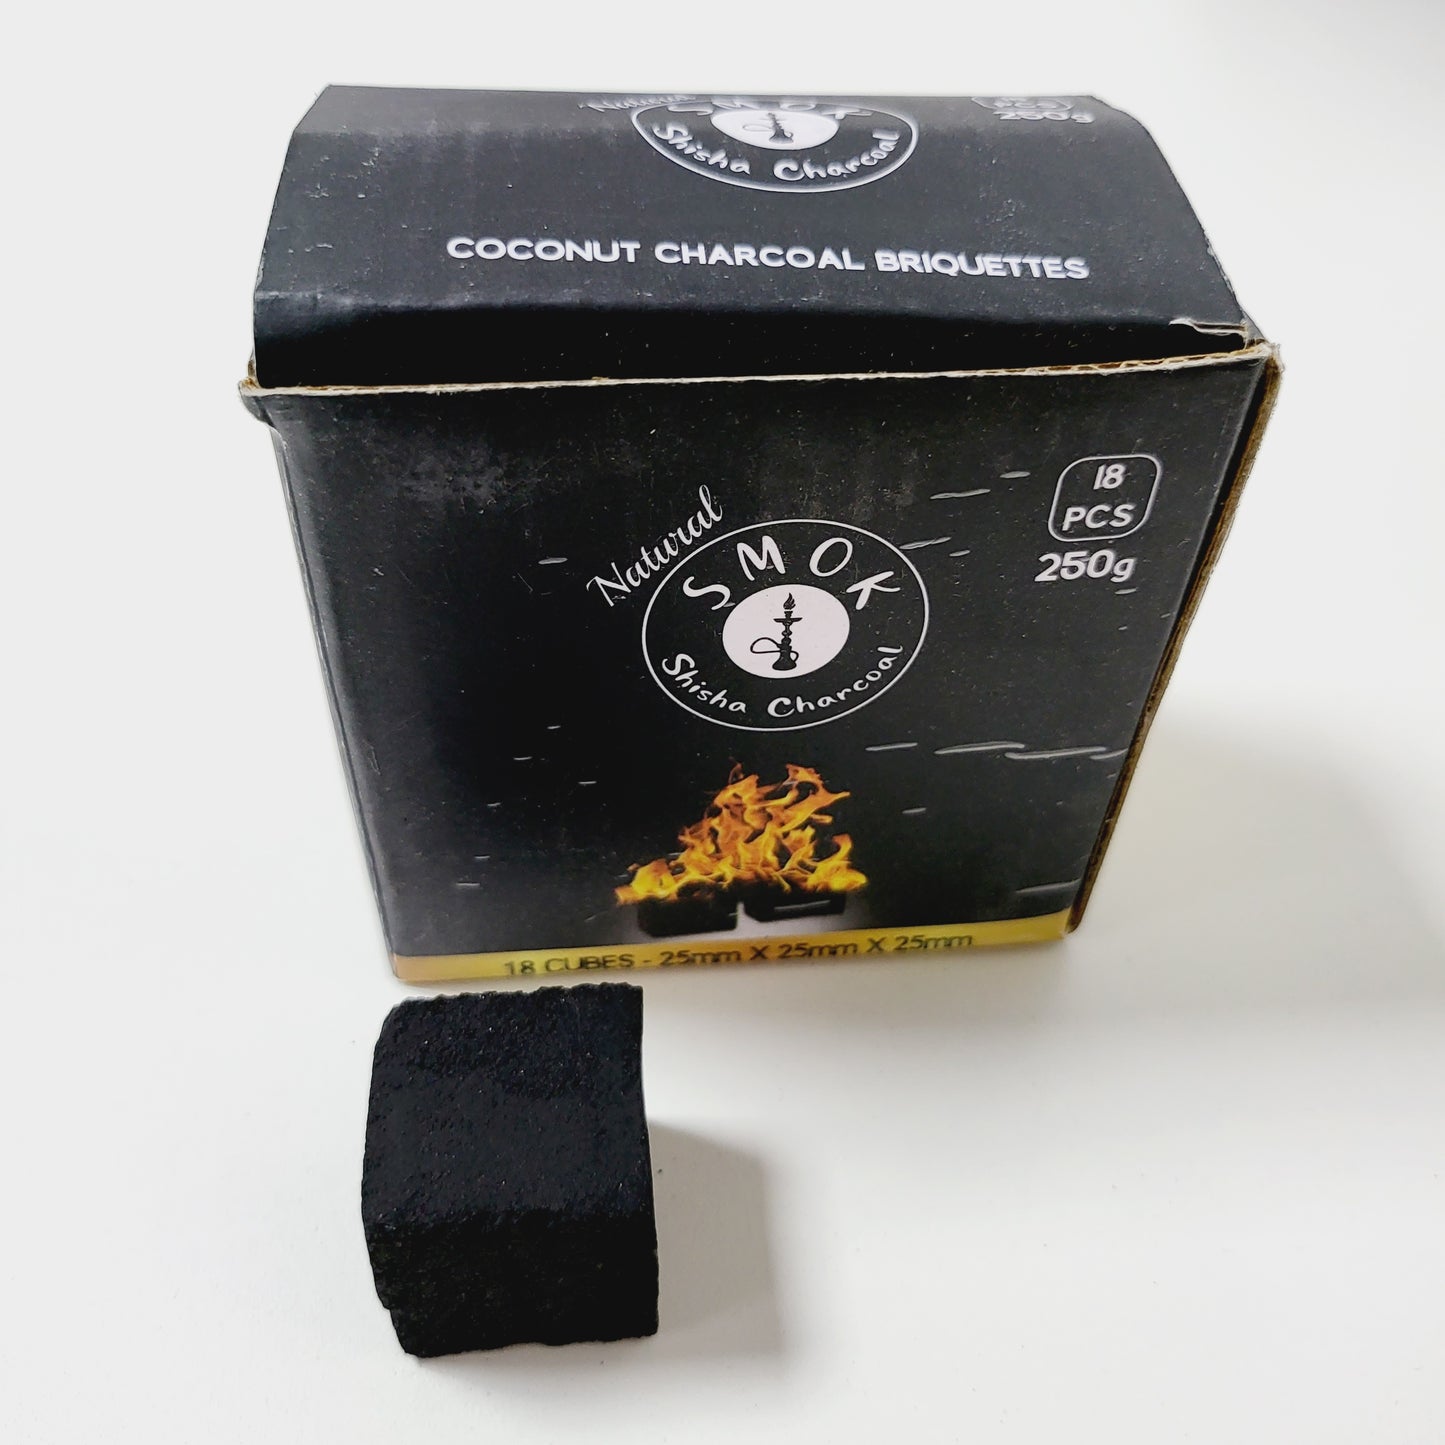 Natural Smok Coconut Coal for Hookah - 250g (18pcs)